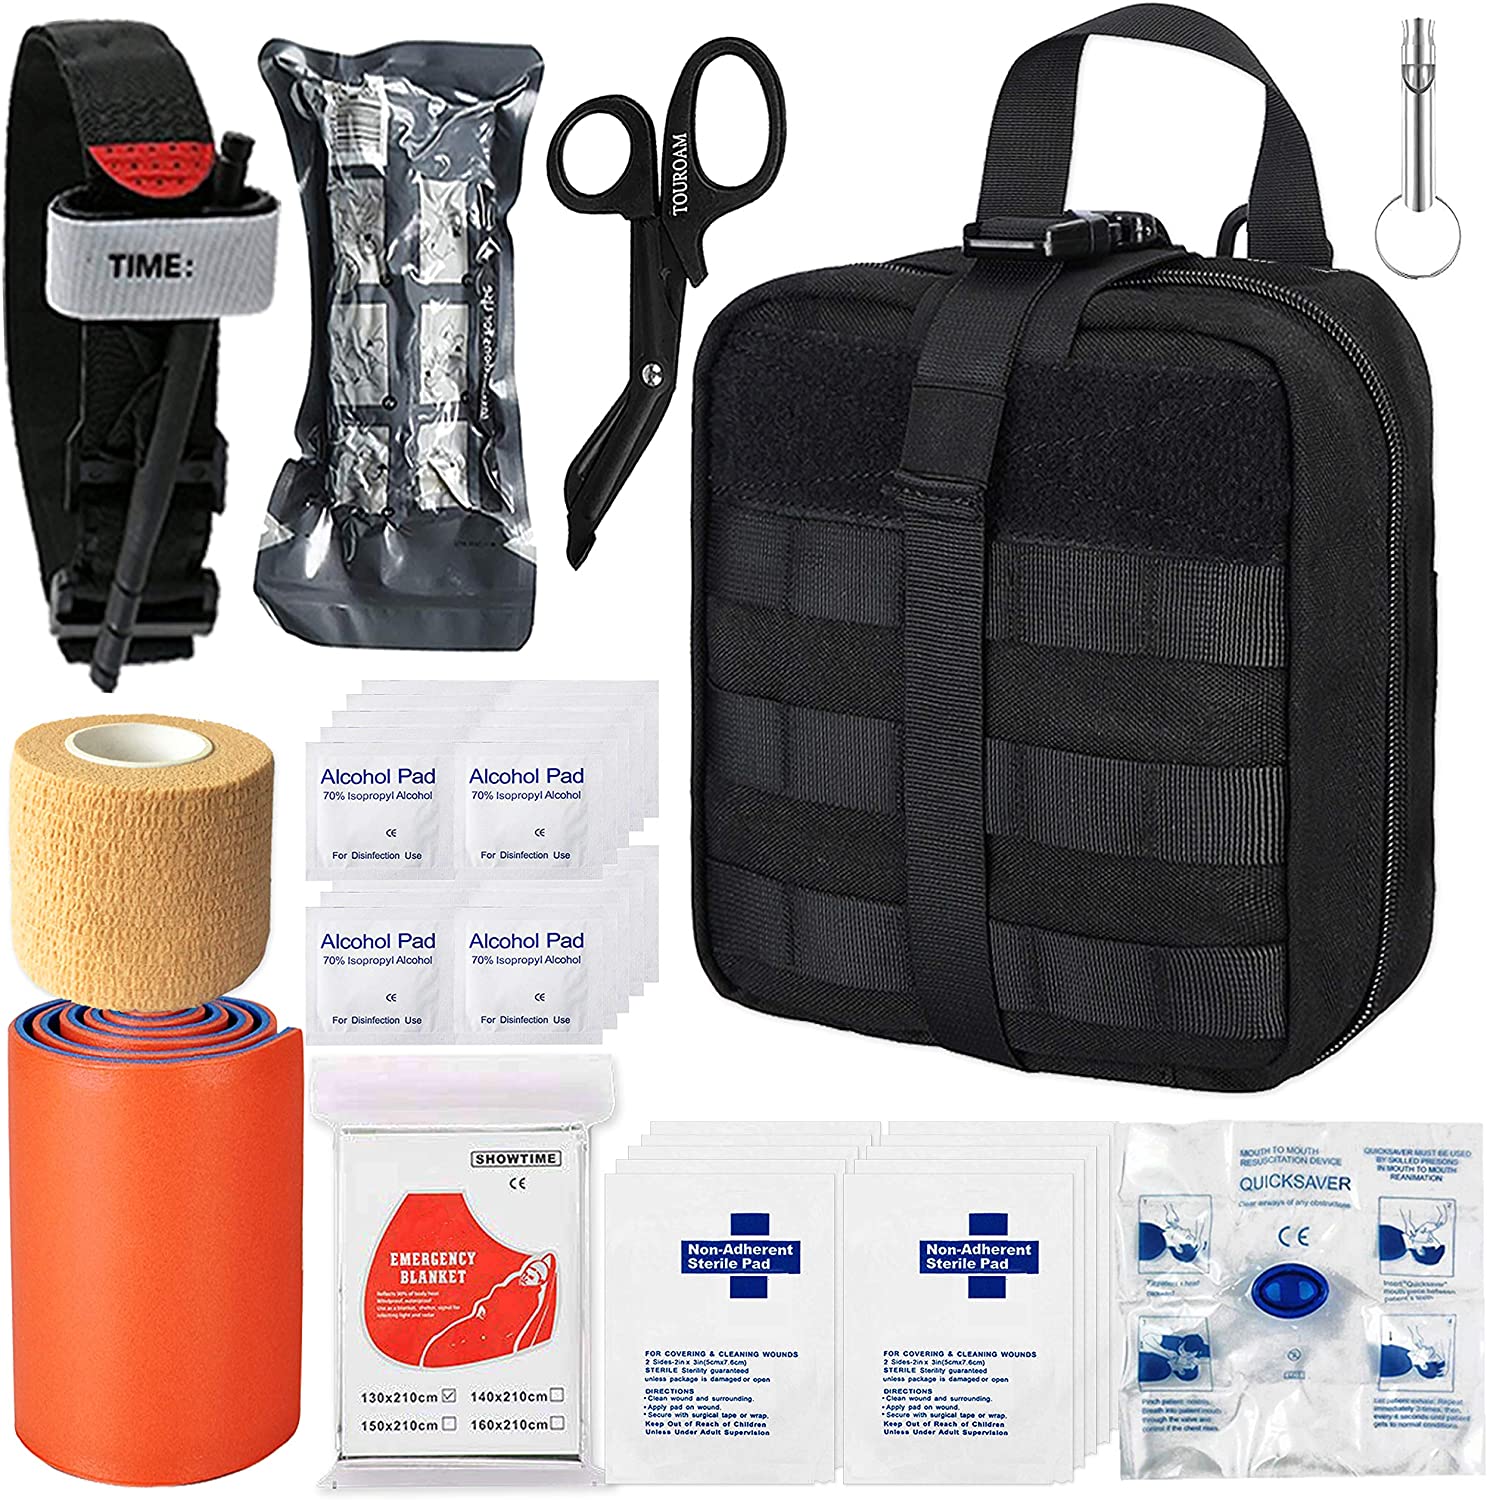  Kit de primeros auxilios para trauma, kit de primeros auxilios  IFAK, kit de medicina EDC de primeros auxilios, bolsa táctica de  emergencia, militar, bolsa Molle de primera respuesta, kit para detener